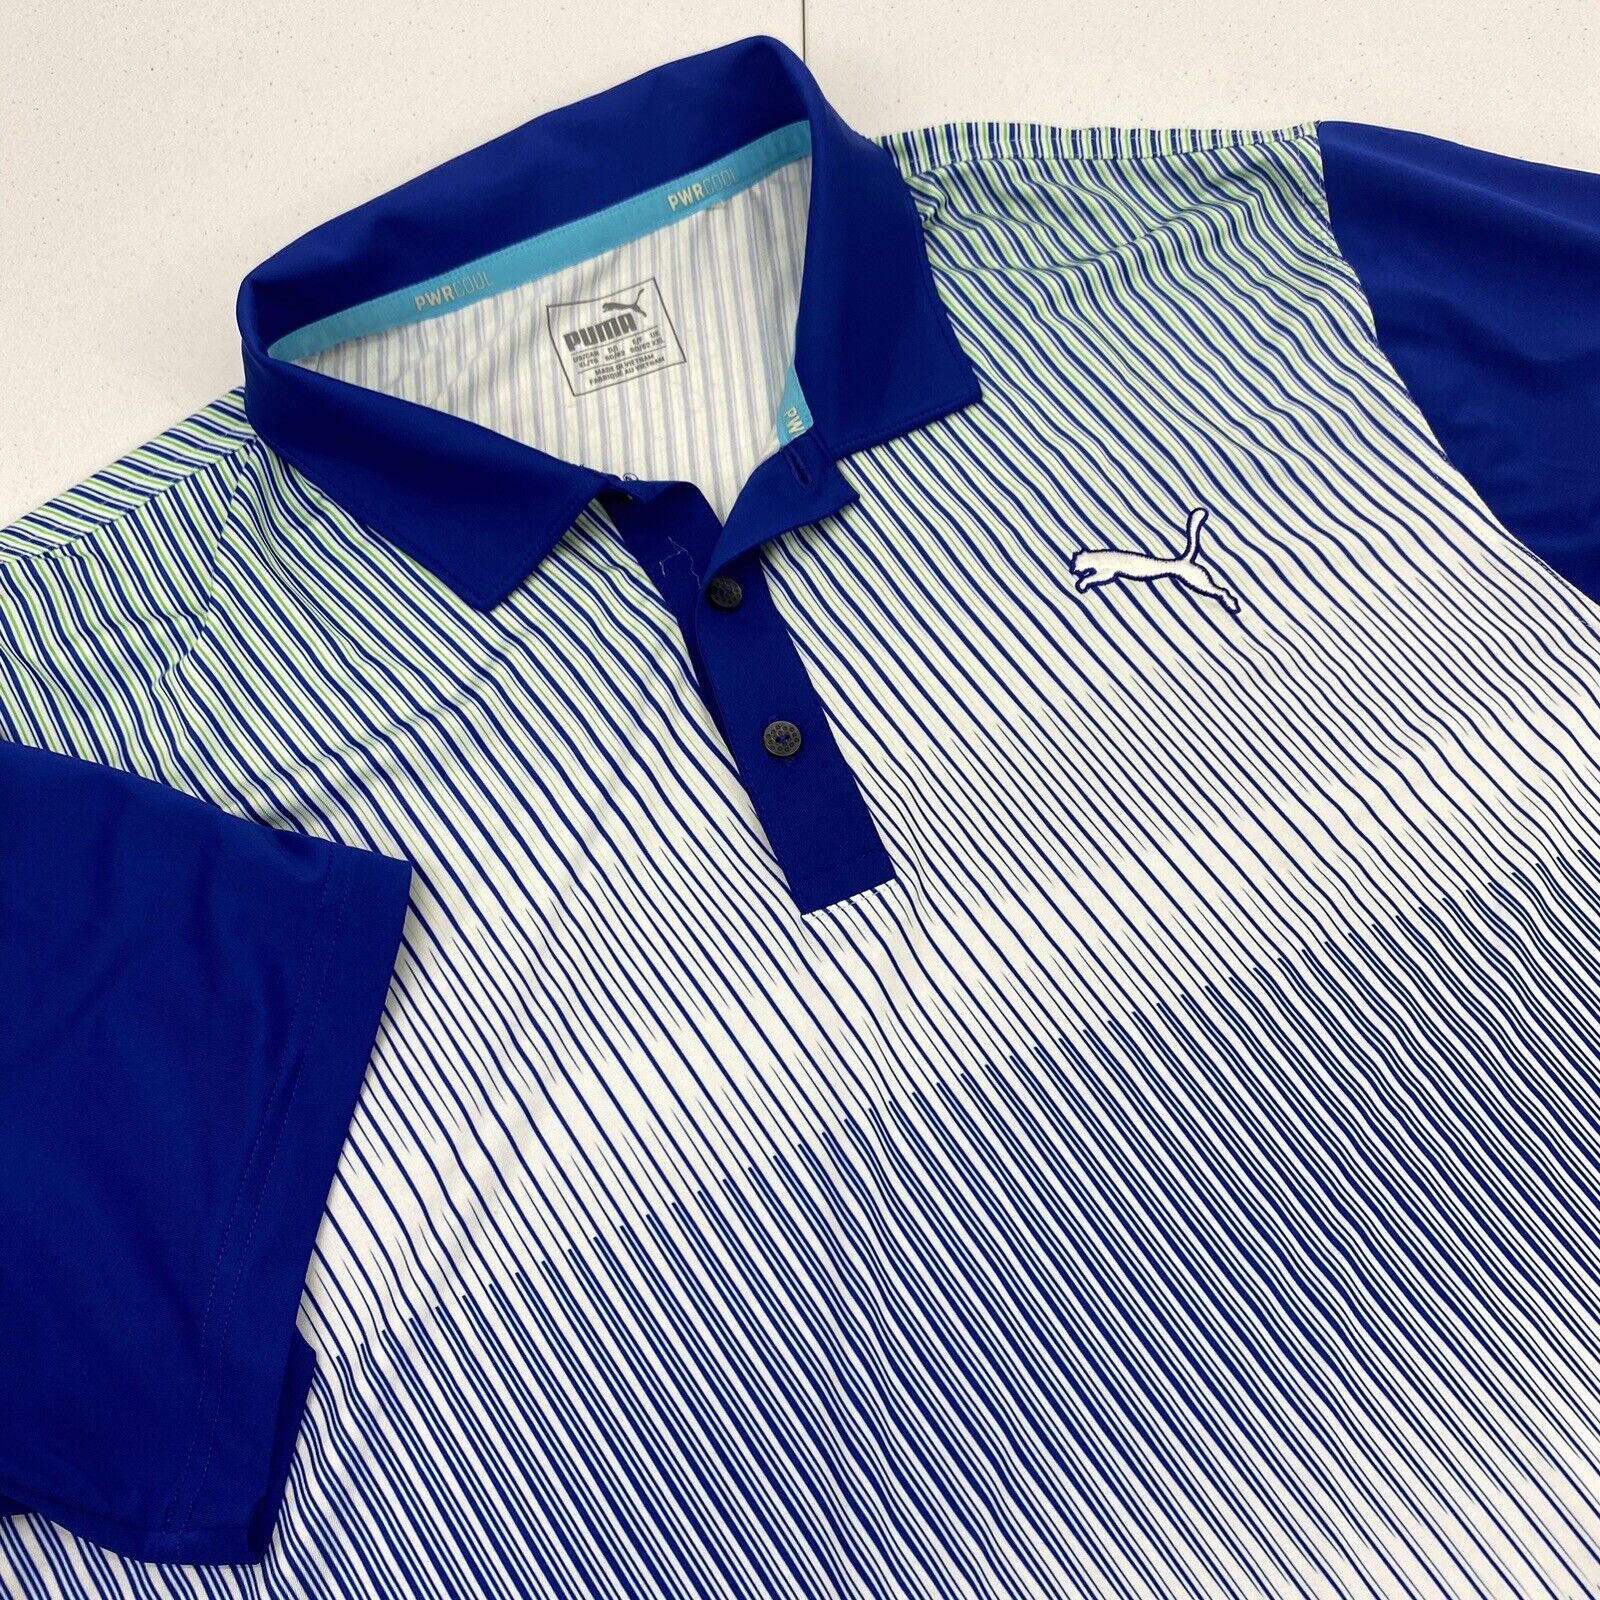 Puma Shirt Men XL Polo Golf Stripe Power Cool Blue Dry Cell Wicking Athleisure